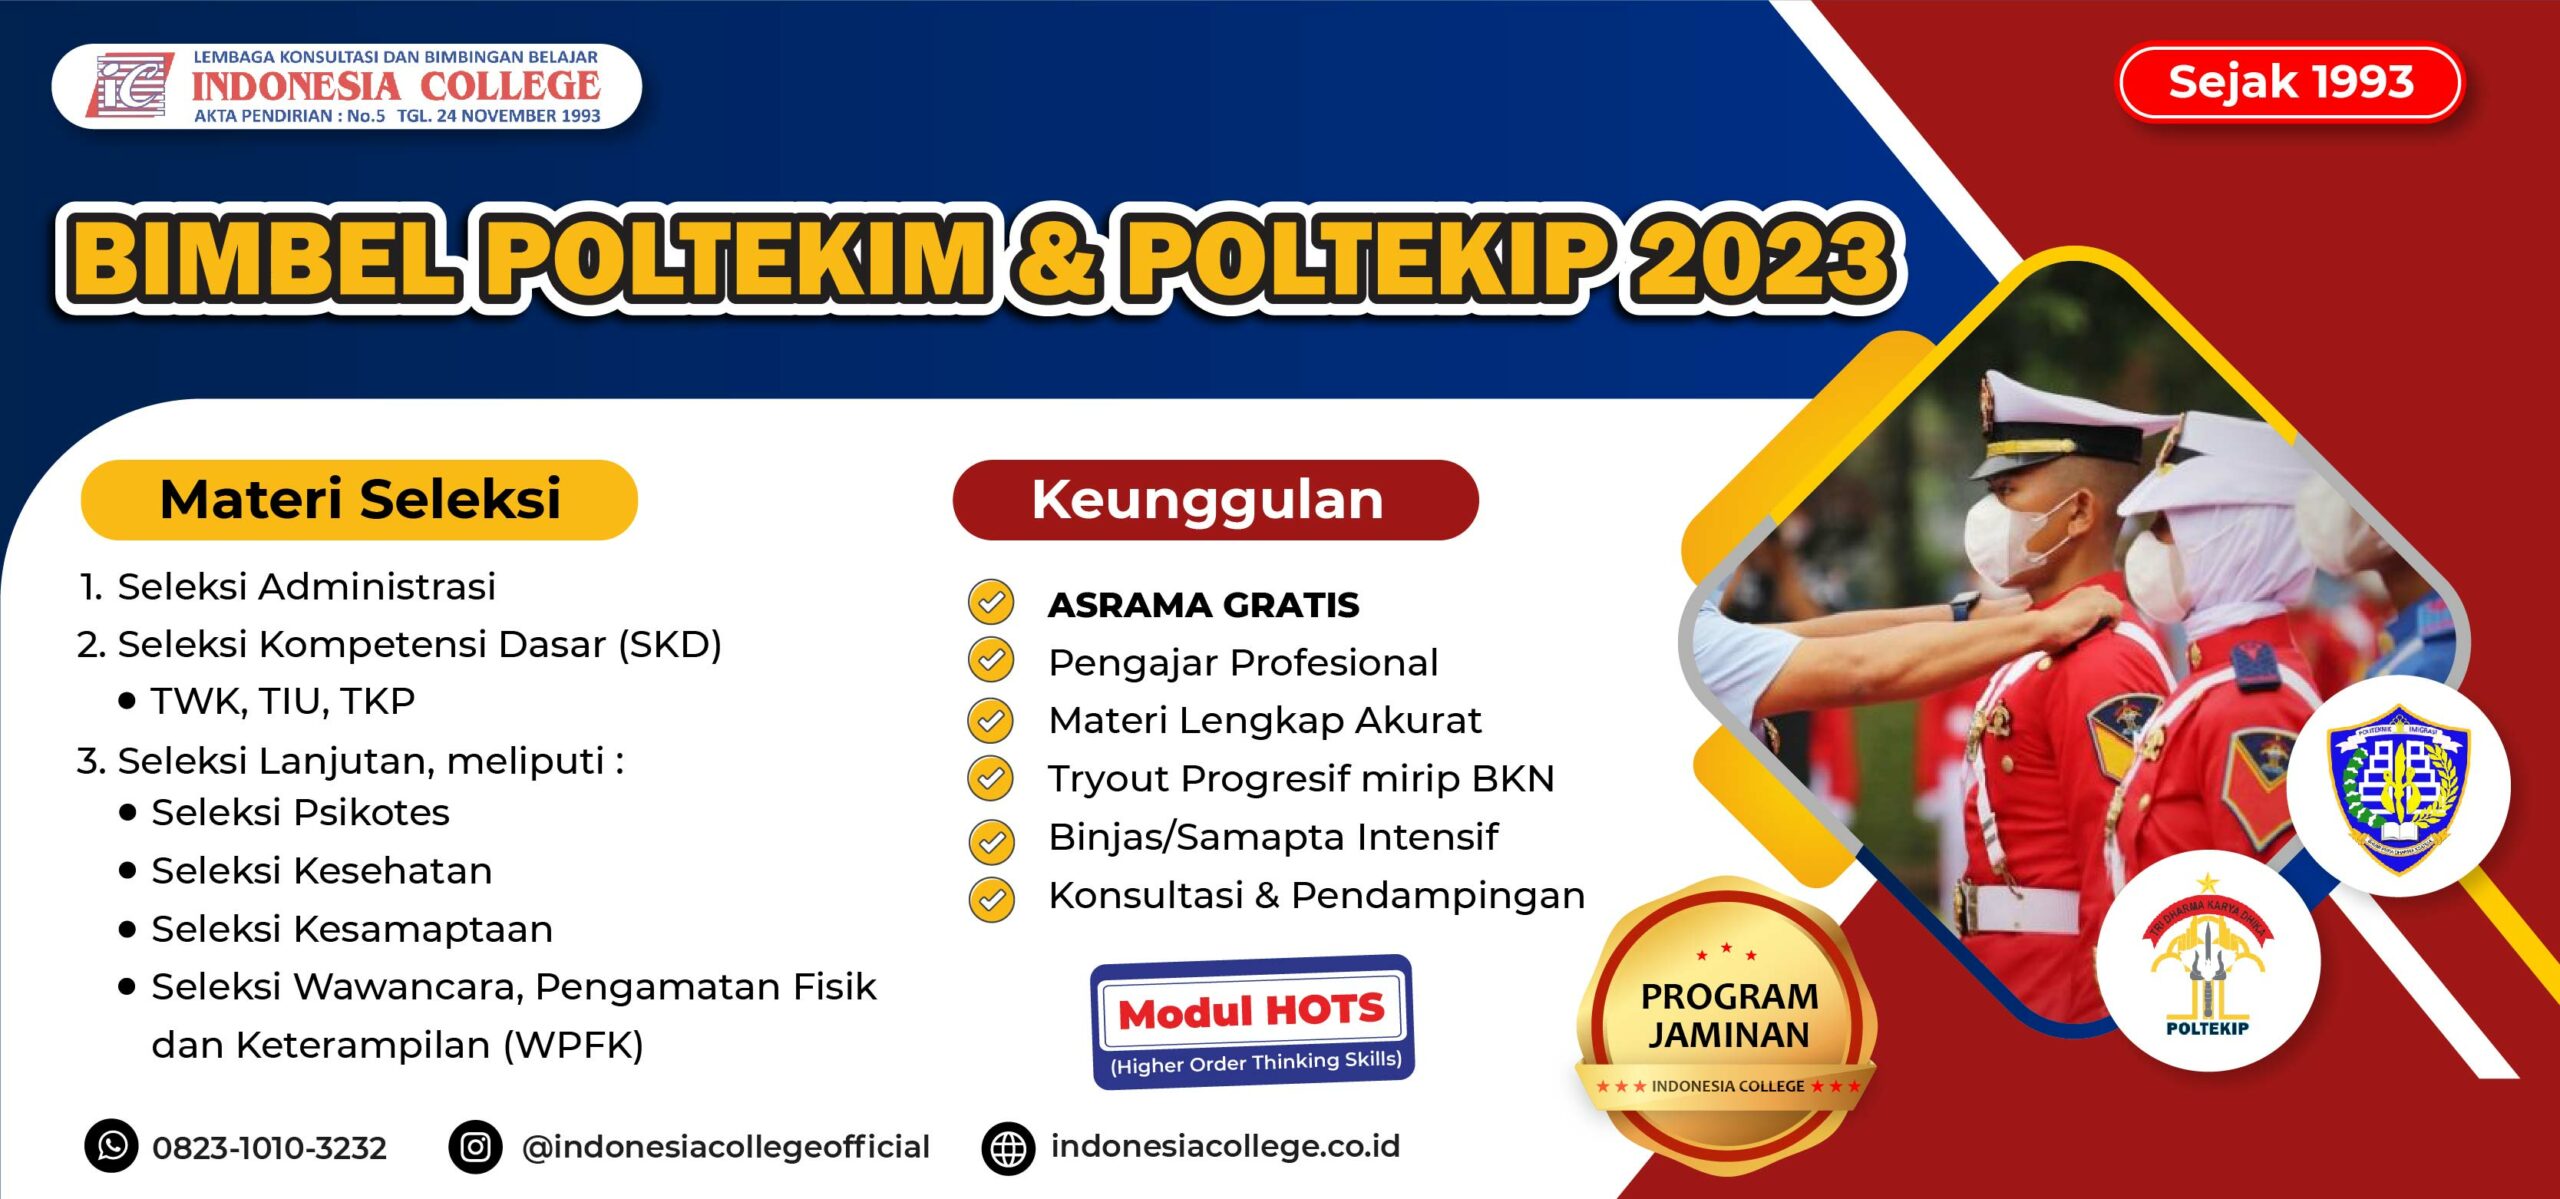 Bimbel POLTEKIM 2023 - Indonesia College